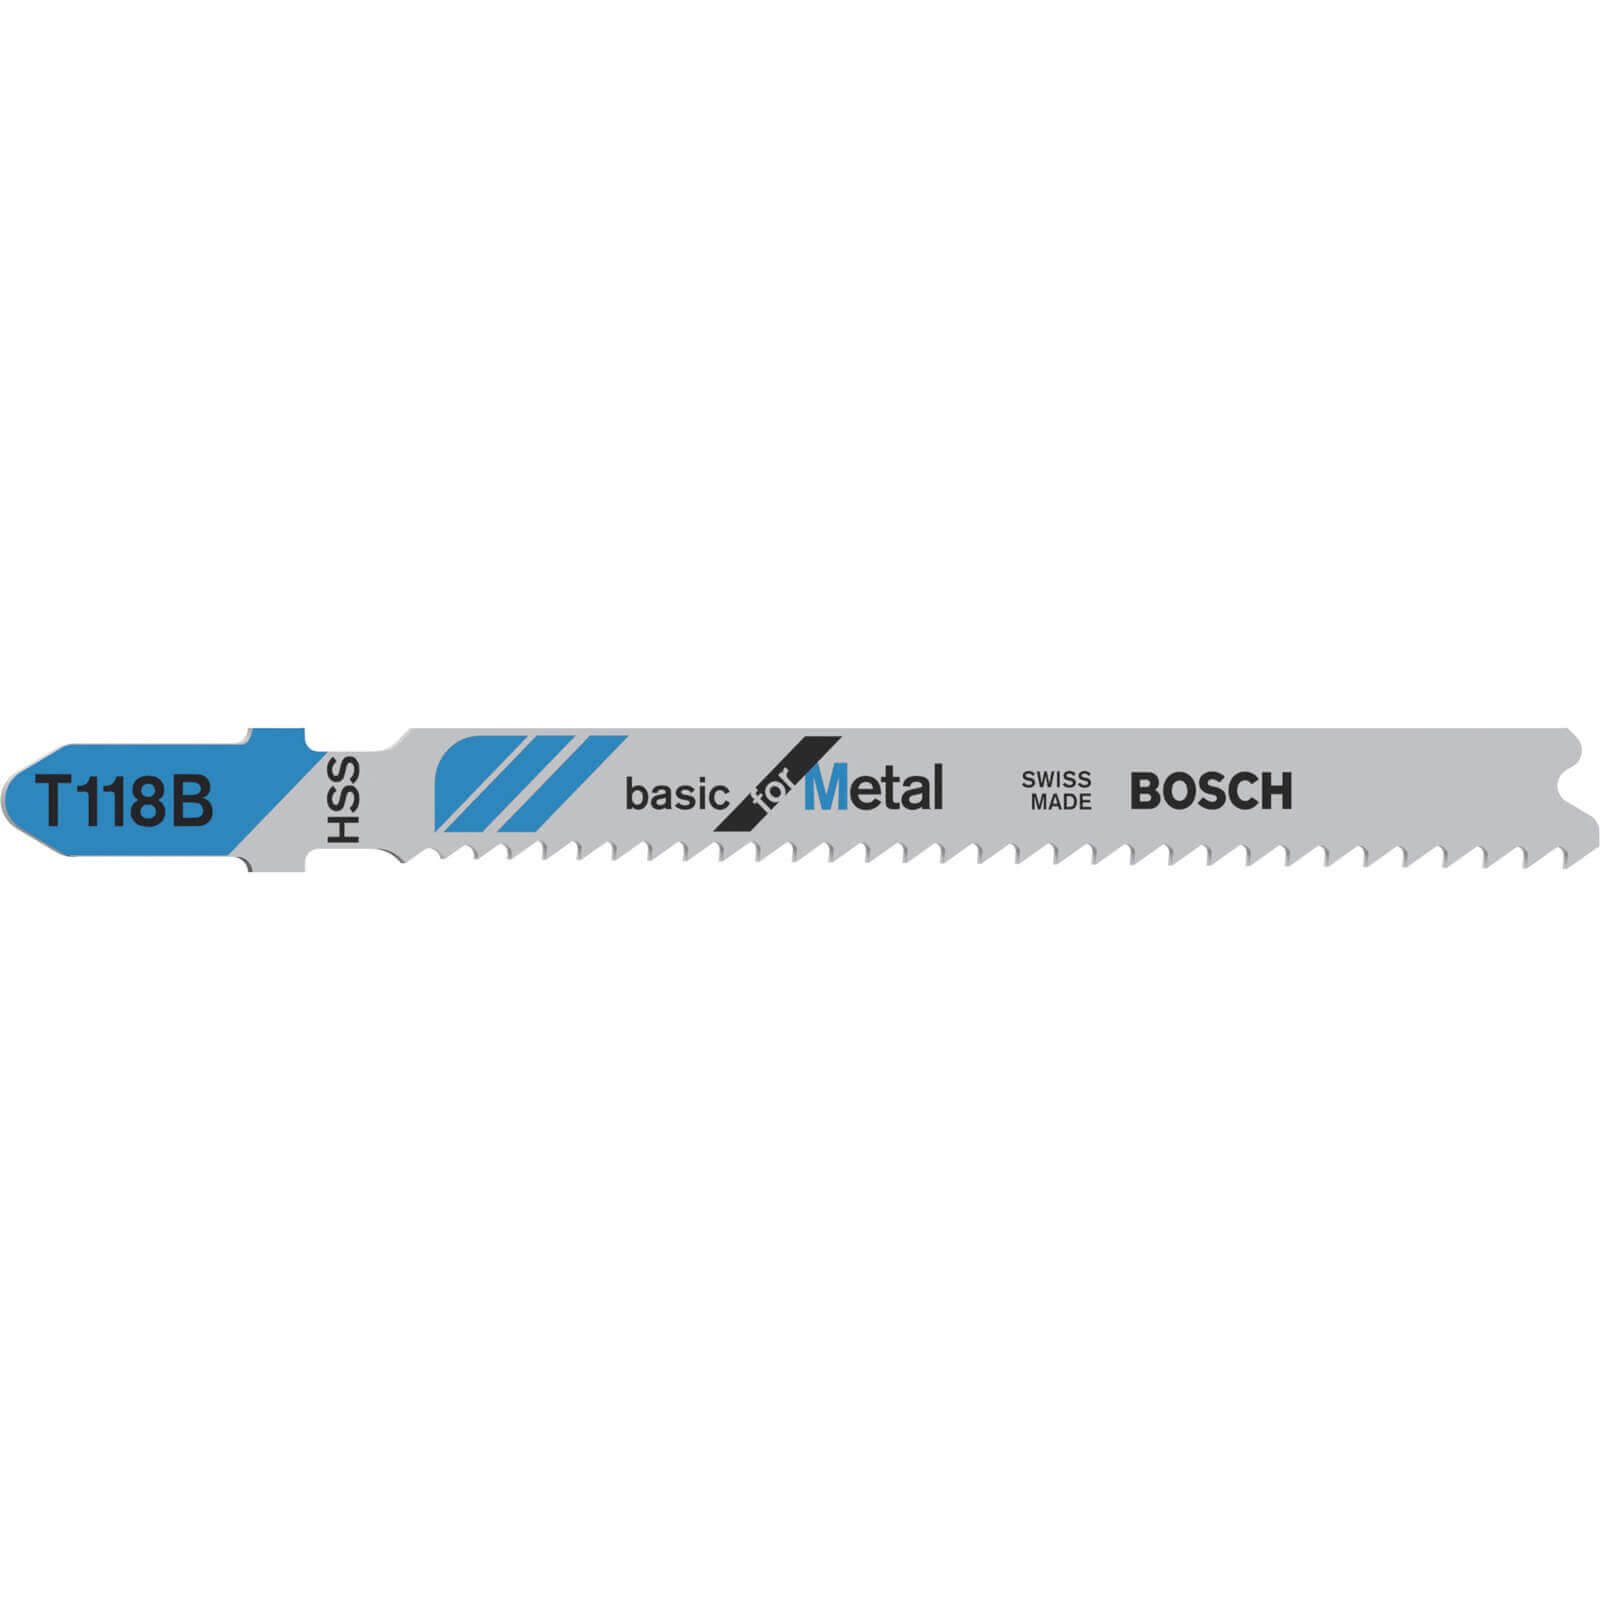 Photo of Bosch T118 B Metal Cutting Jigsaw Blades Pack Of 25